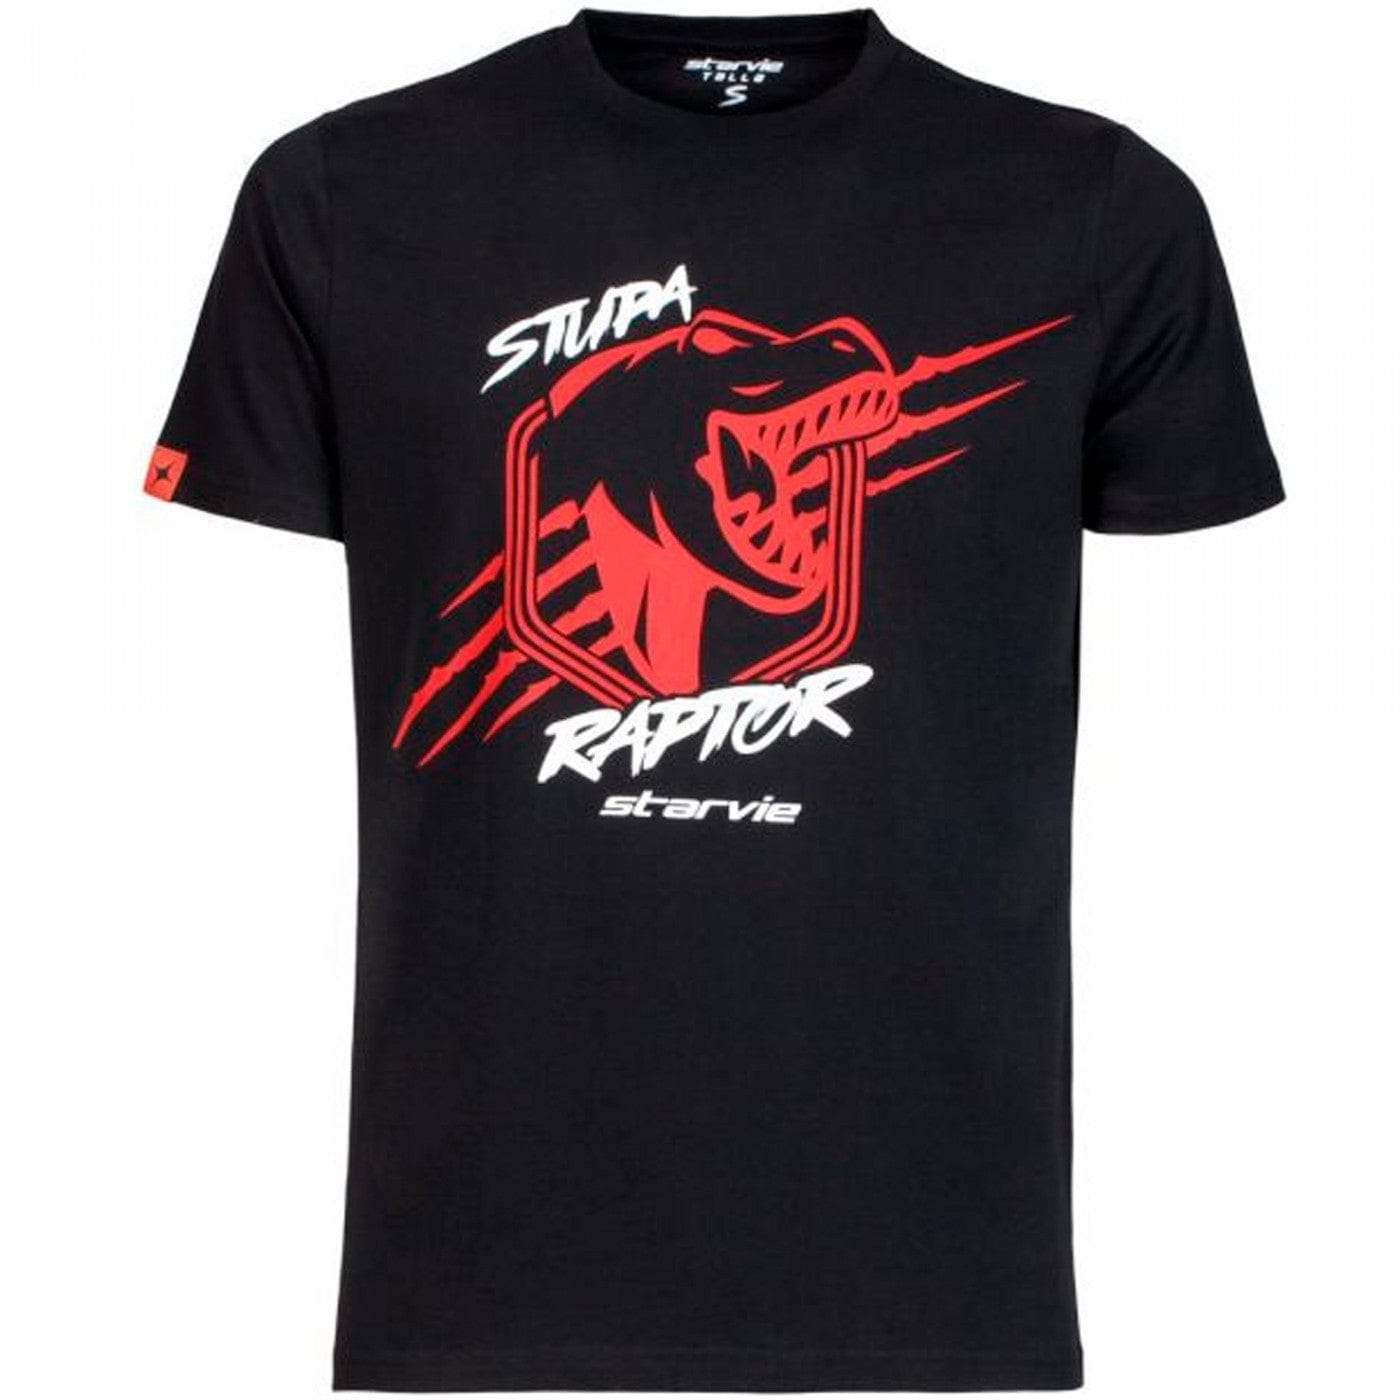 Camiseta Starvie Stupa Raptor